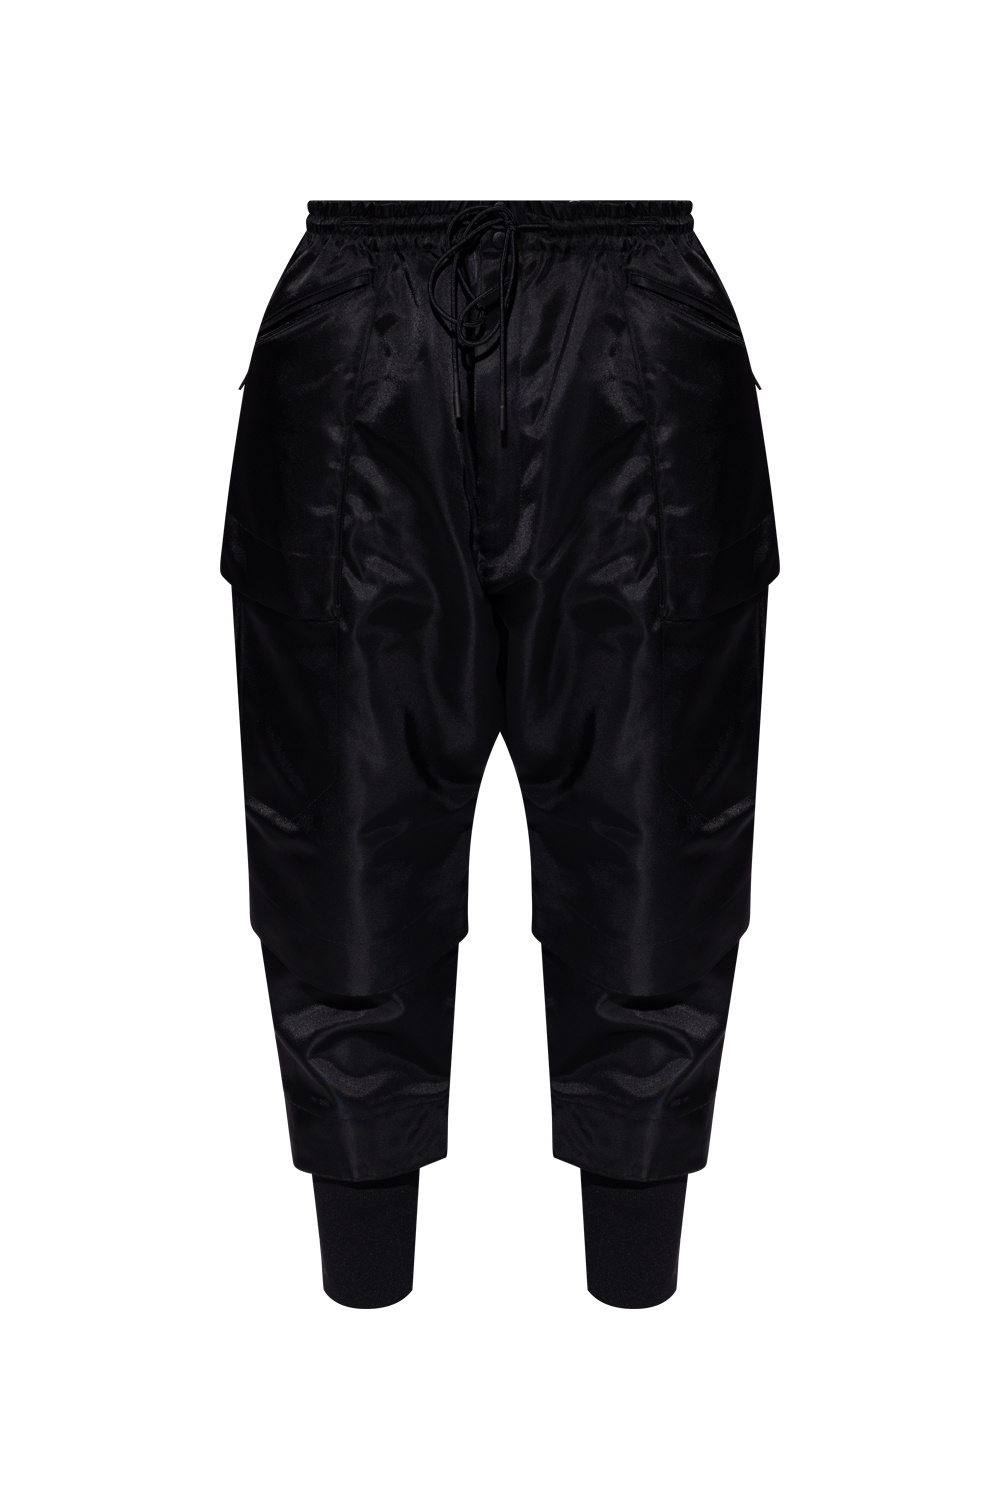 IetpShops Mayotte - Trousers with pockets Y - 3 Yohji Yamamoto ... اسعار لاب توب